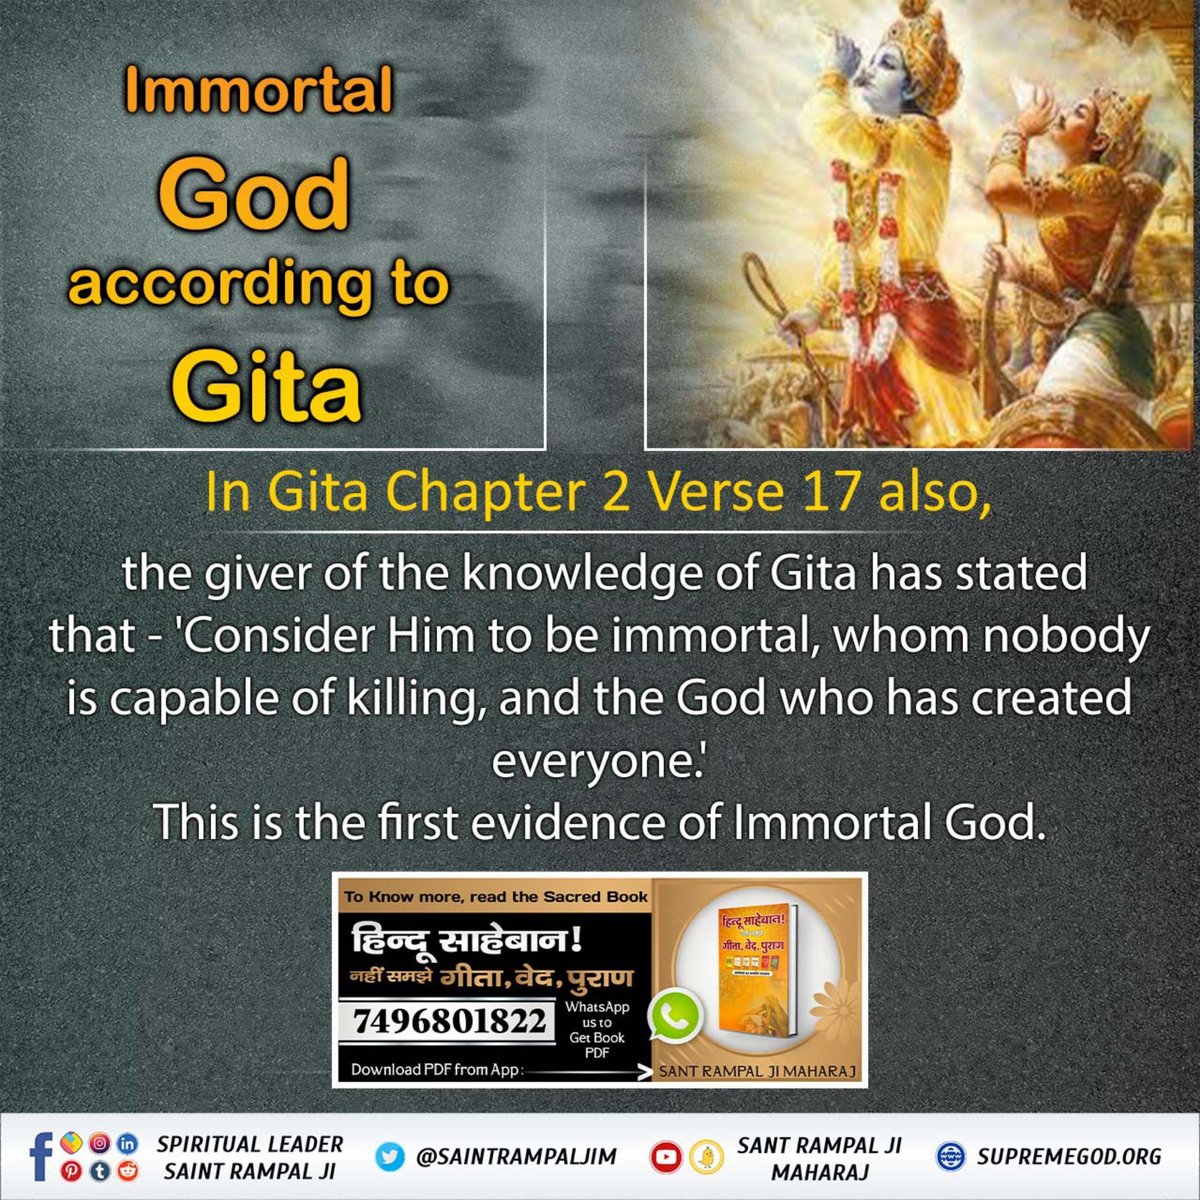 #Gita_Is_Divine_Knowledge
We Should Follow It
👇👇👇